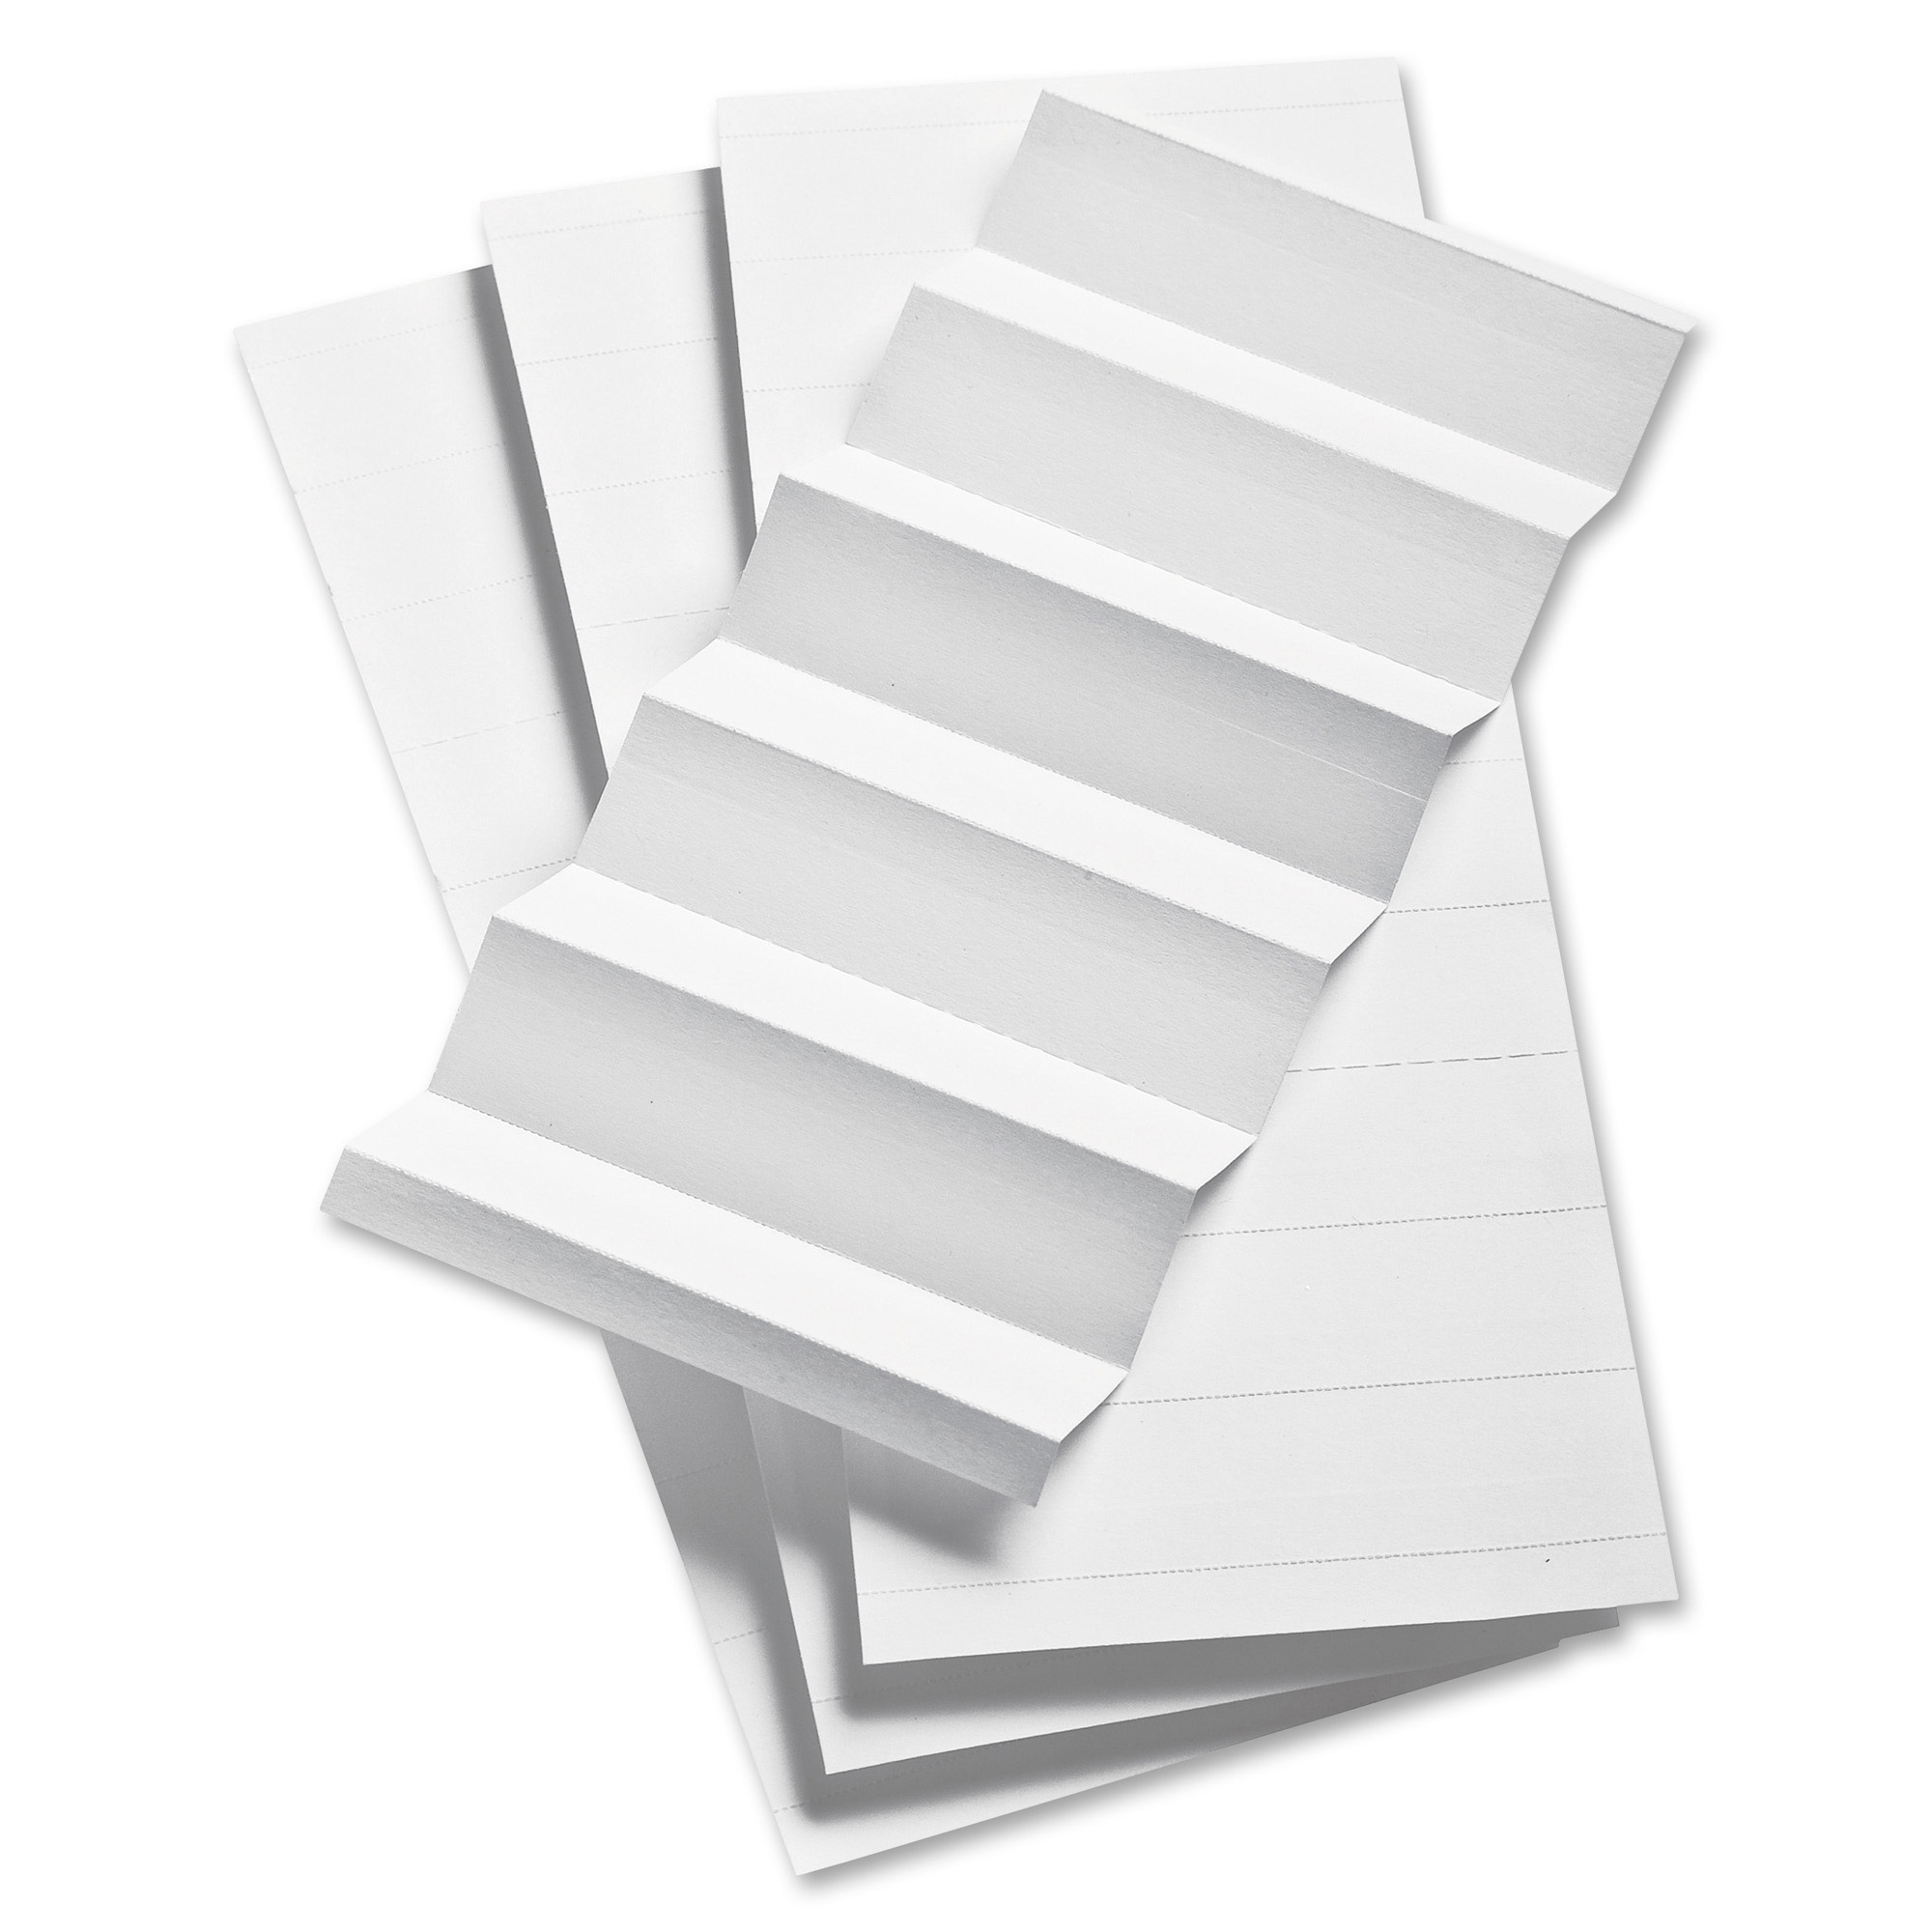 7 Best Images of Printable Tab Insert Template Hanging File Folder